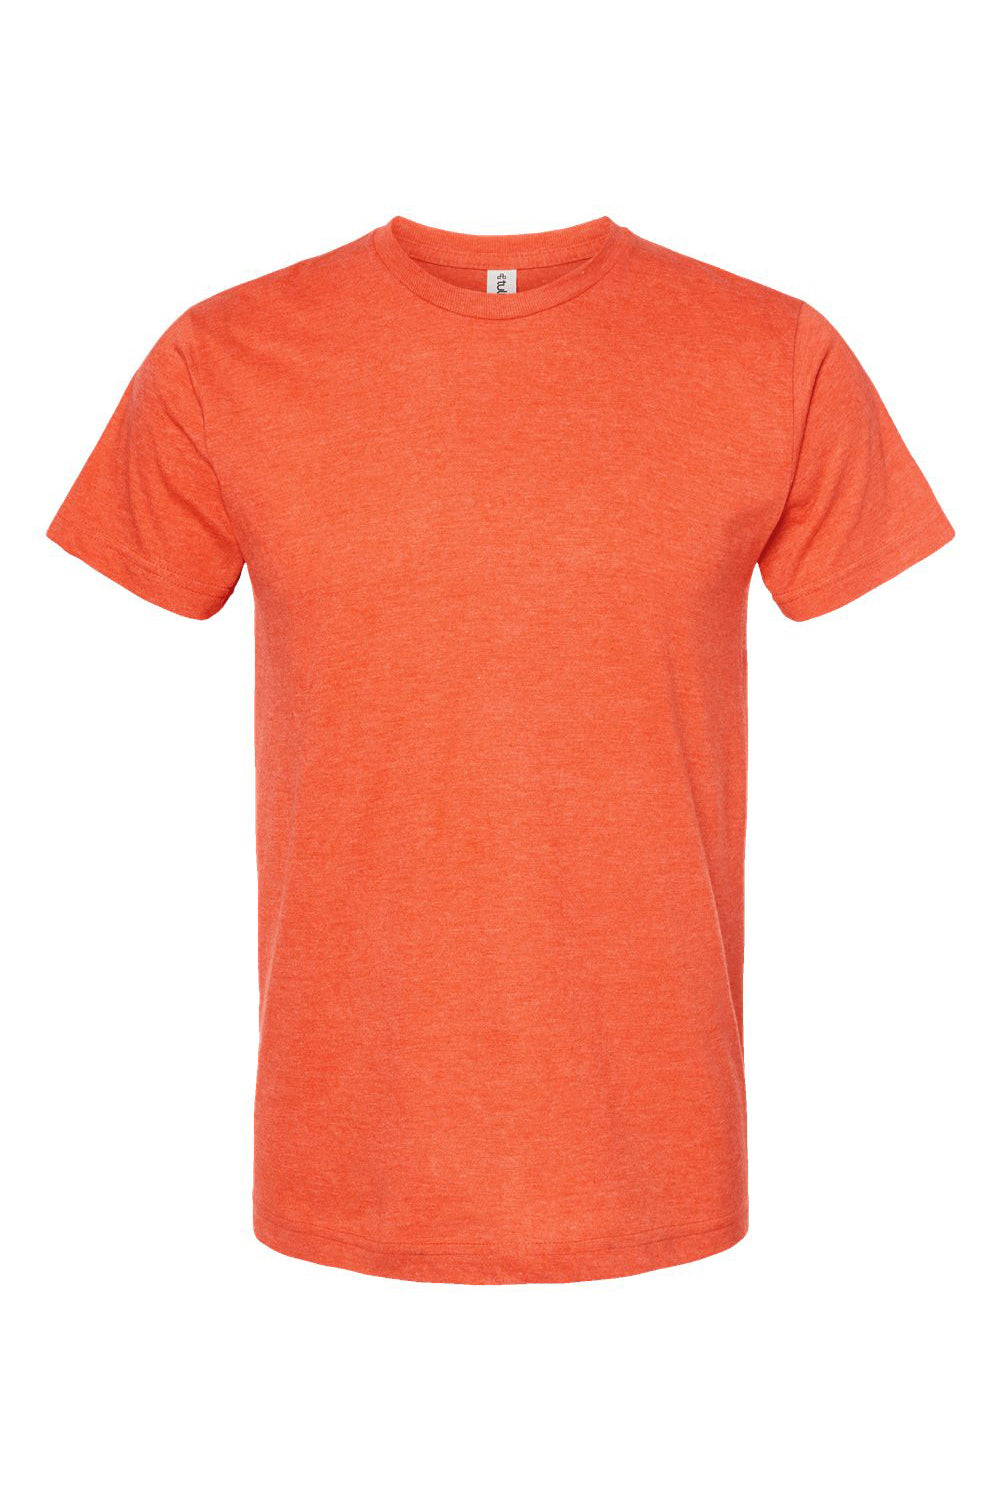 Tultex 202 Mens Fine Jersey Short Sleeve Crewneck T-Shirt Heather Orange Flat Front